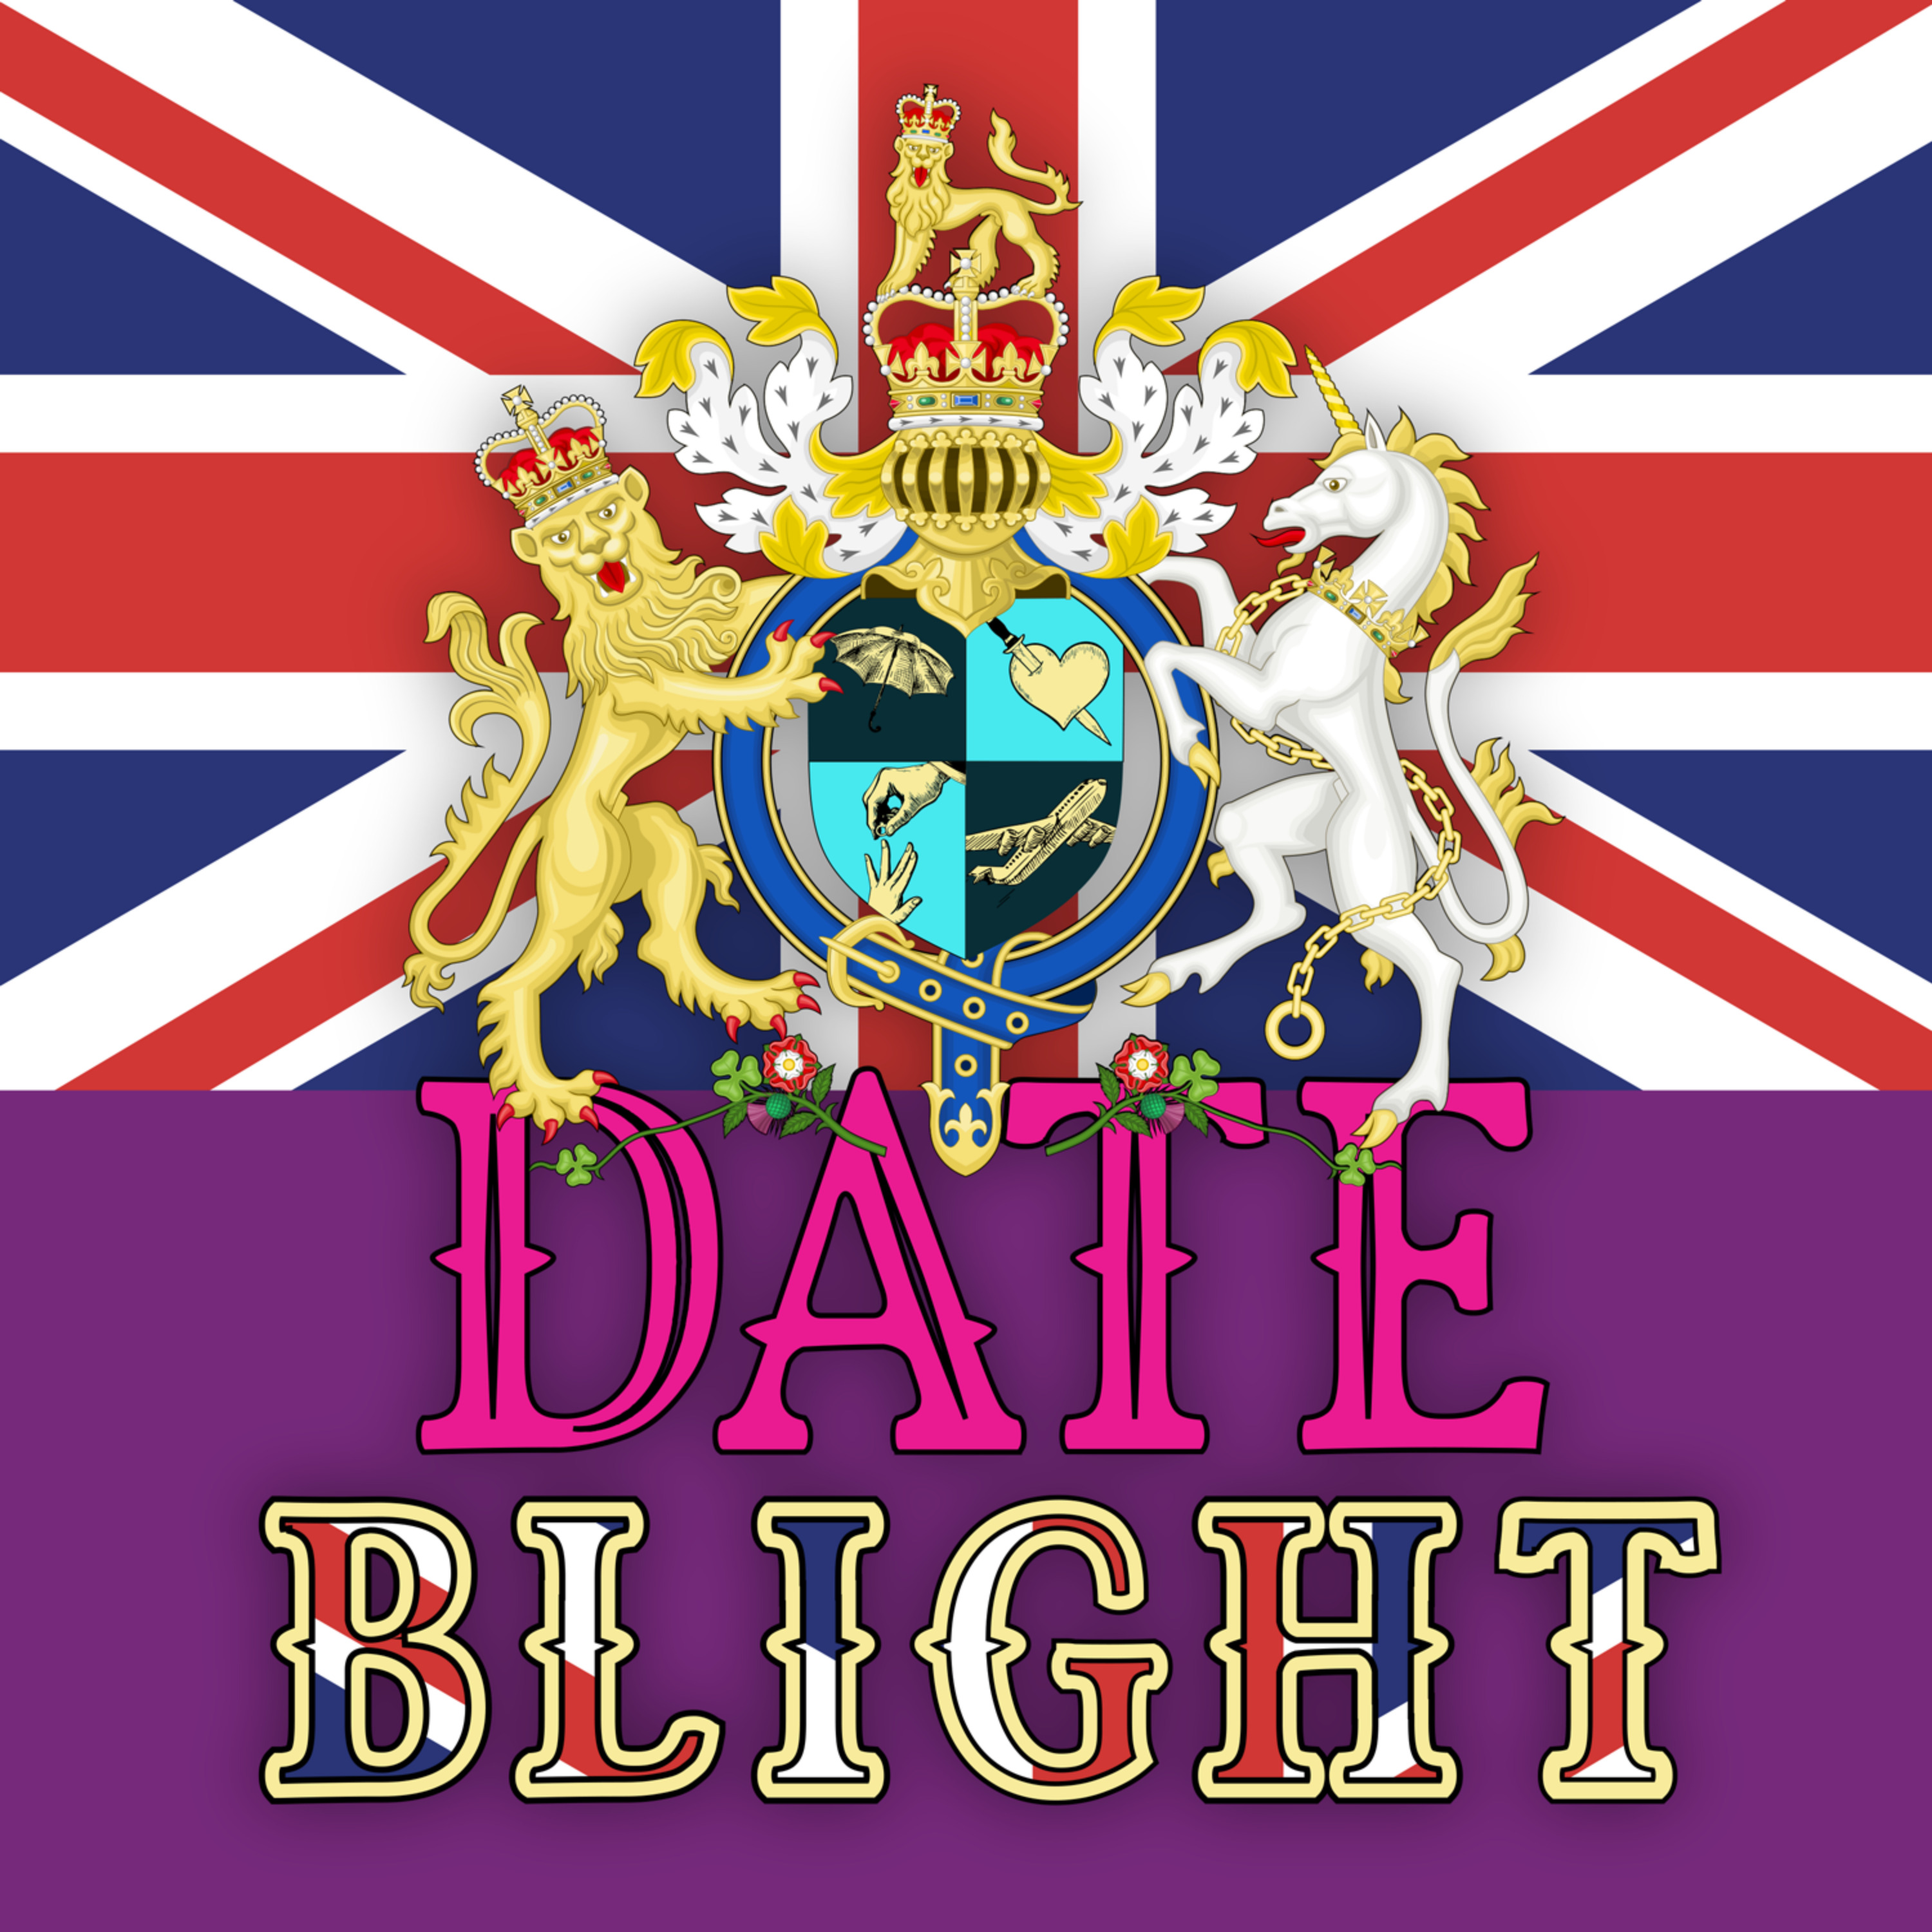 Date Blight - 14 January 2023